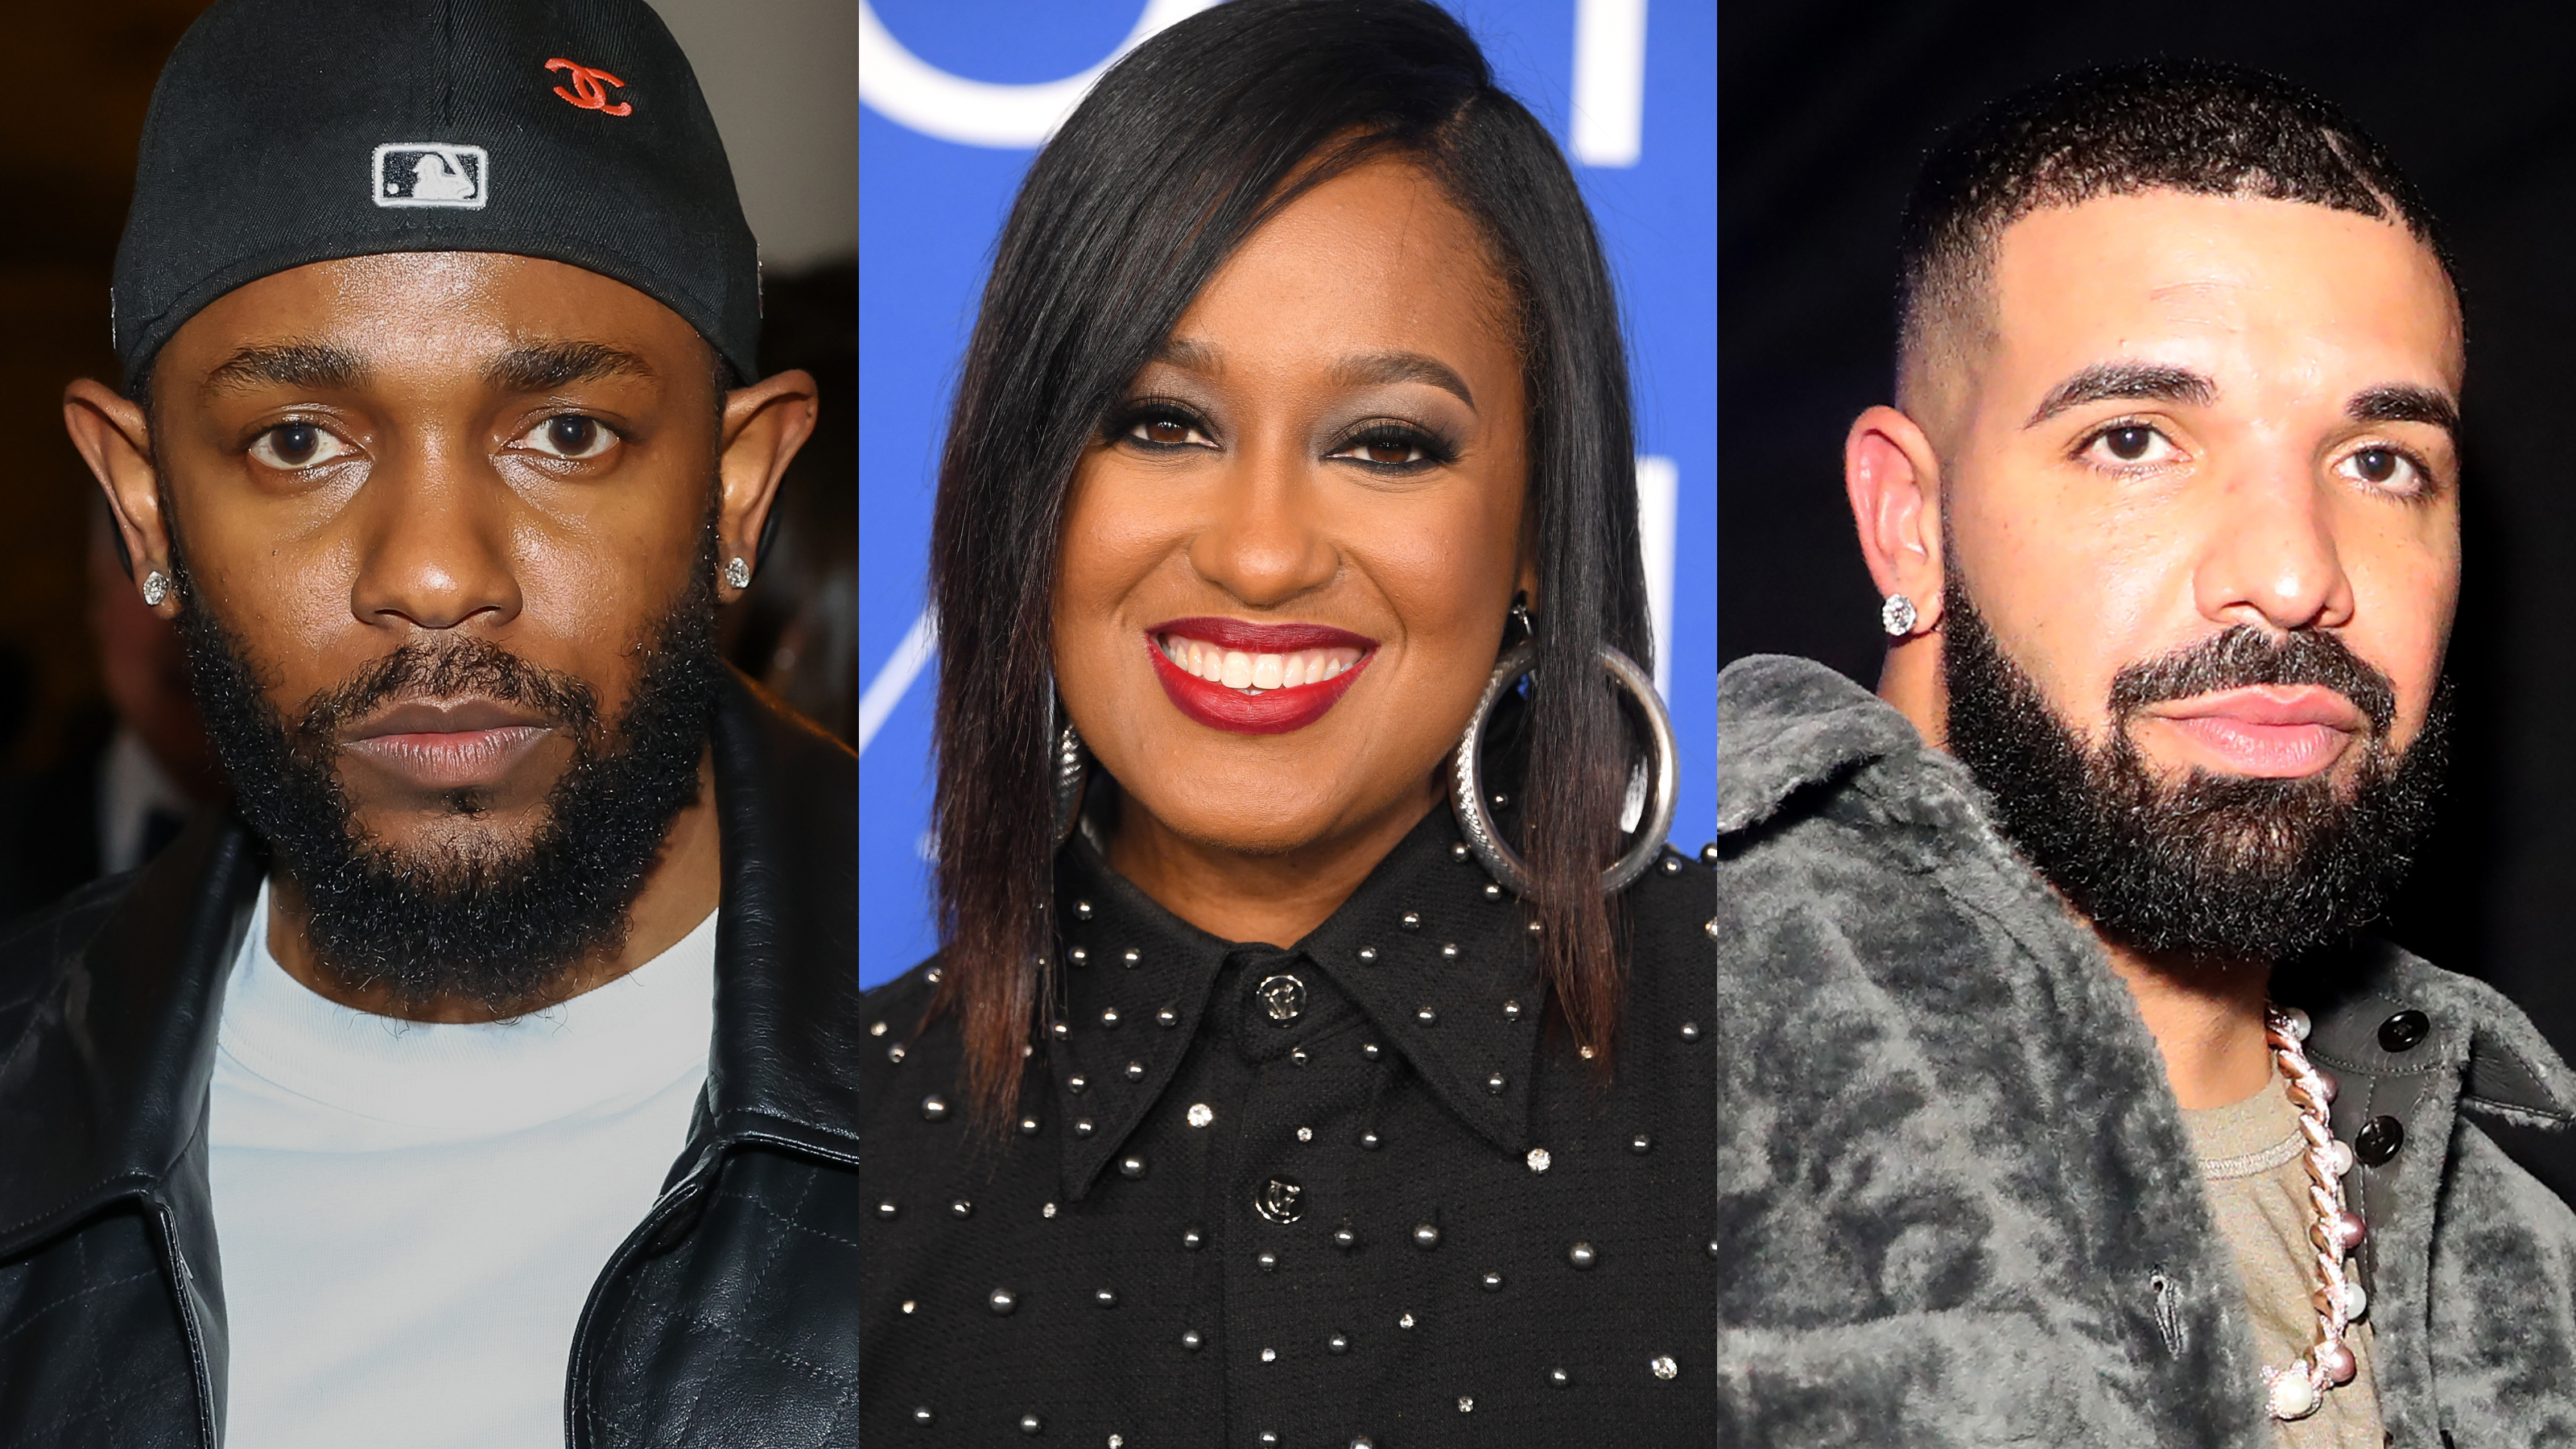 Rapsody Says Kendrick Lamar Was More Strategic In Drake Battle: “You Gotta Study The Art Of War”